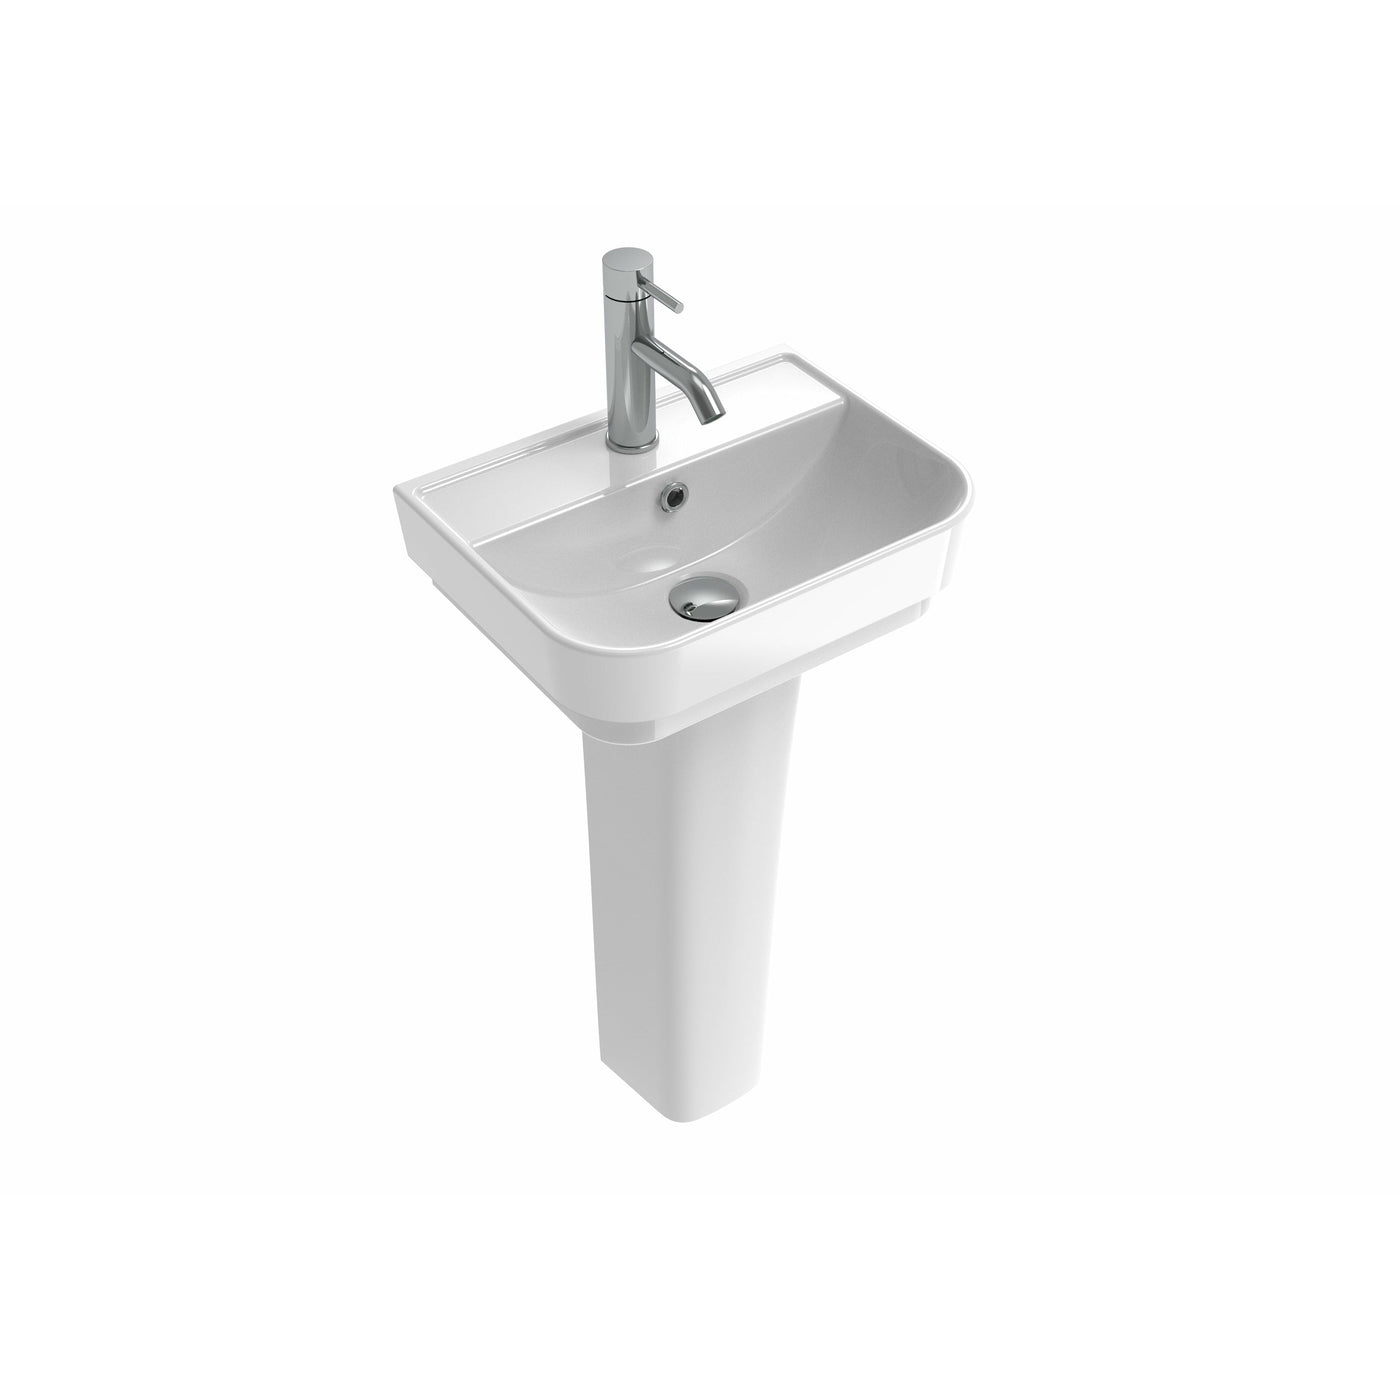 VITA 45x35cm washbasin 1TH with full pedestal - Letta London - 